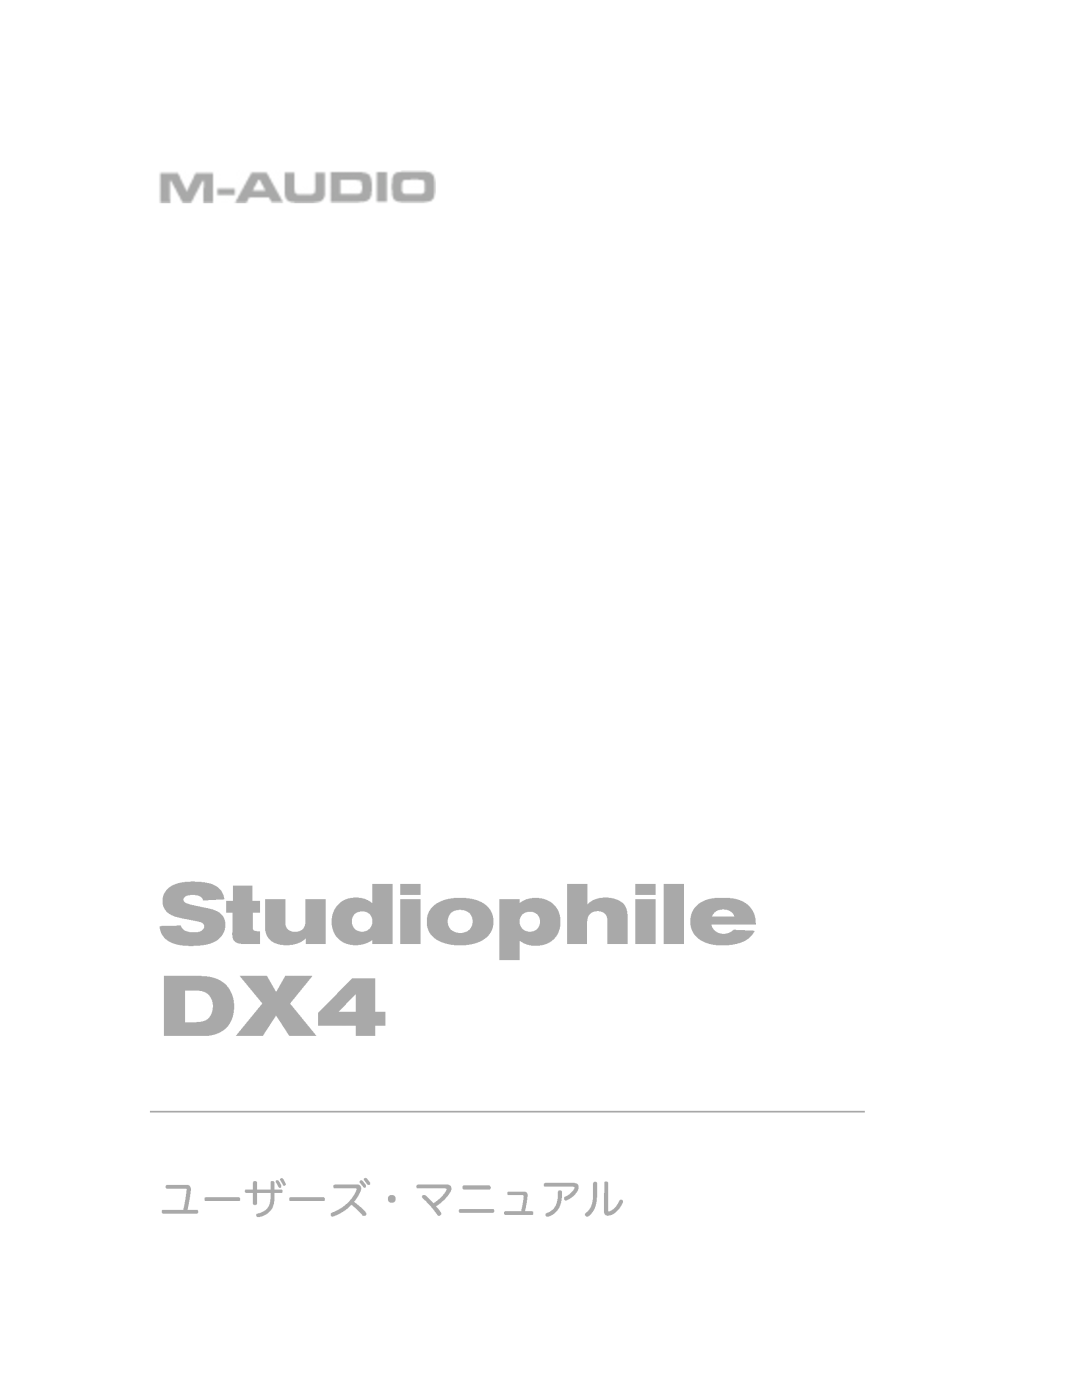 M-Audio manual Studiophile DX4, Manuale dellutente 